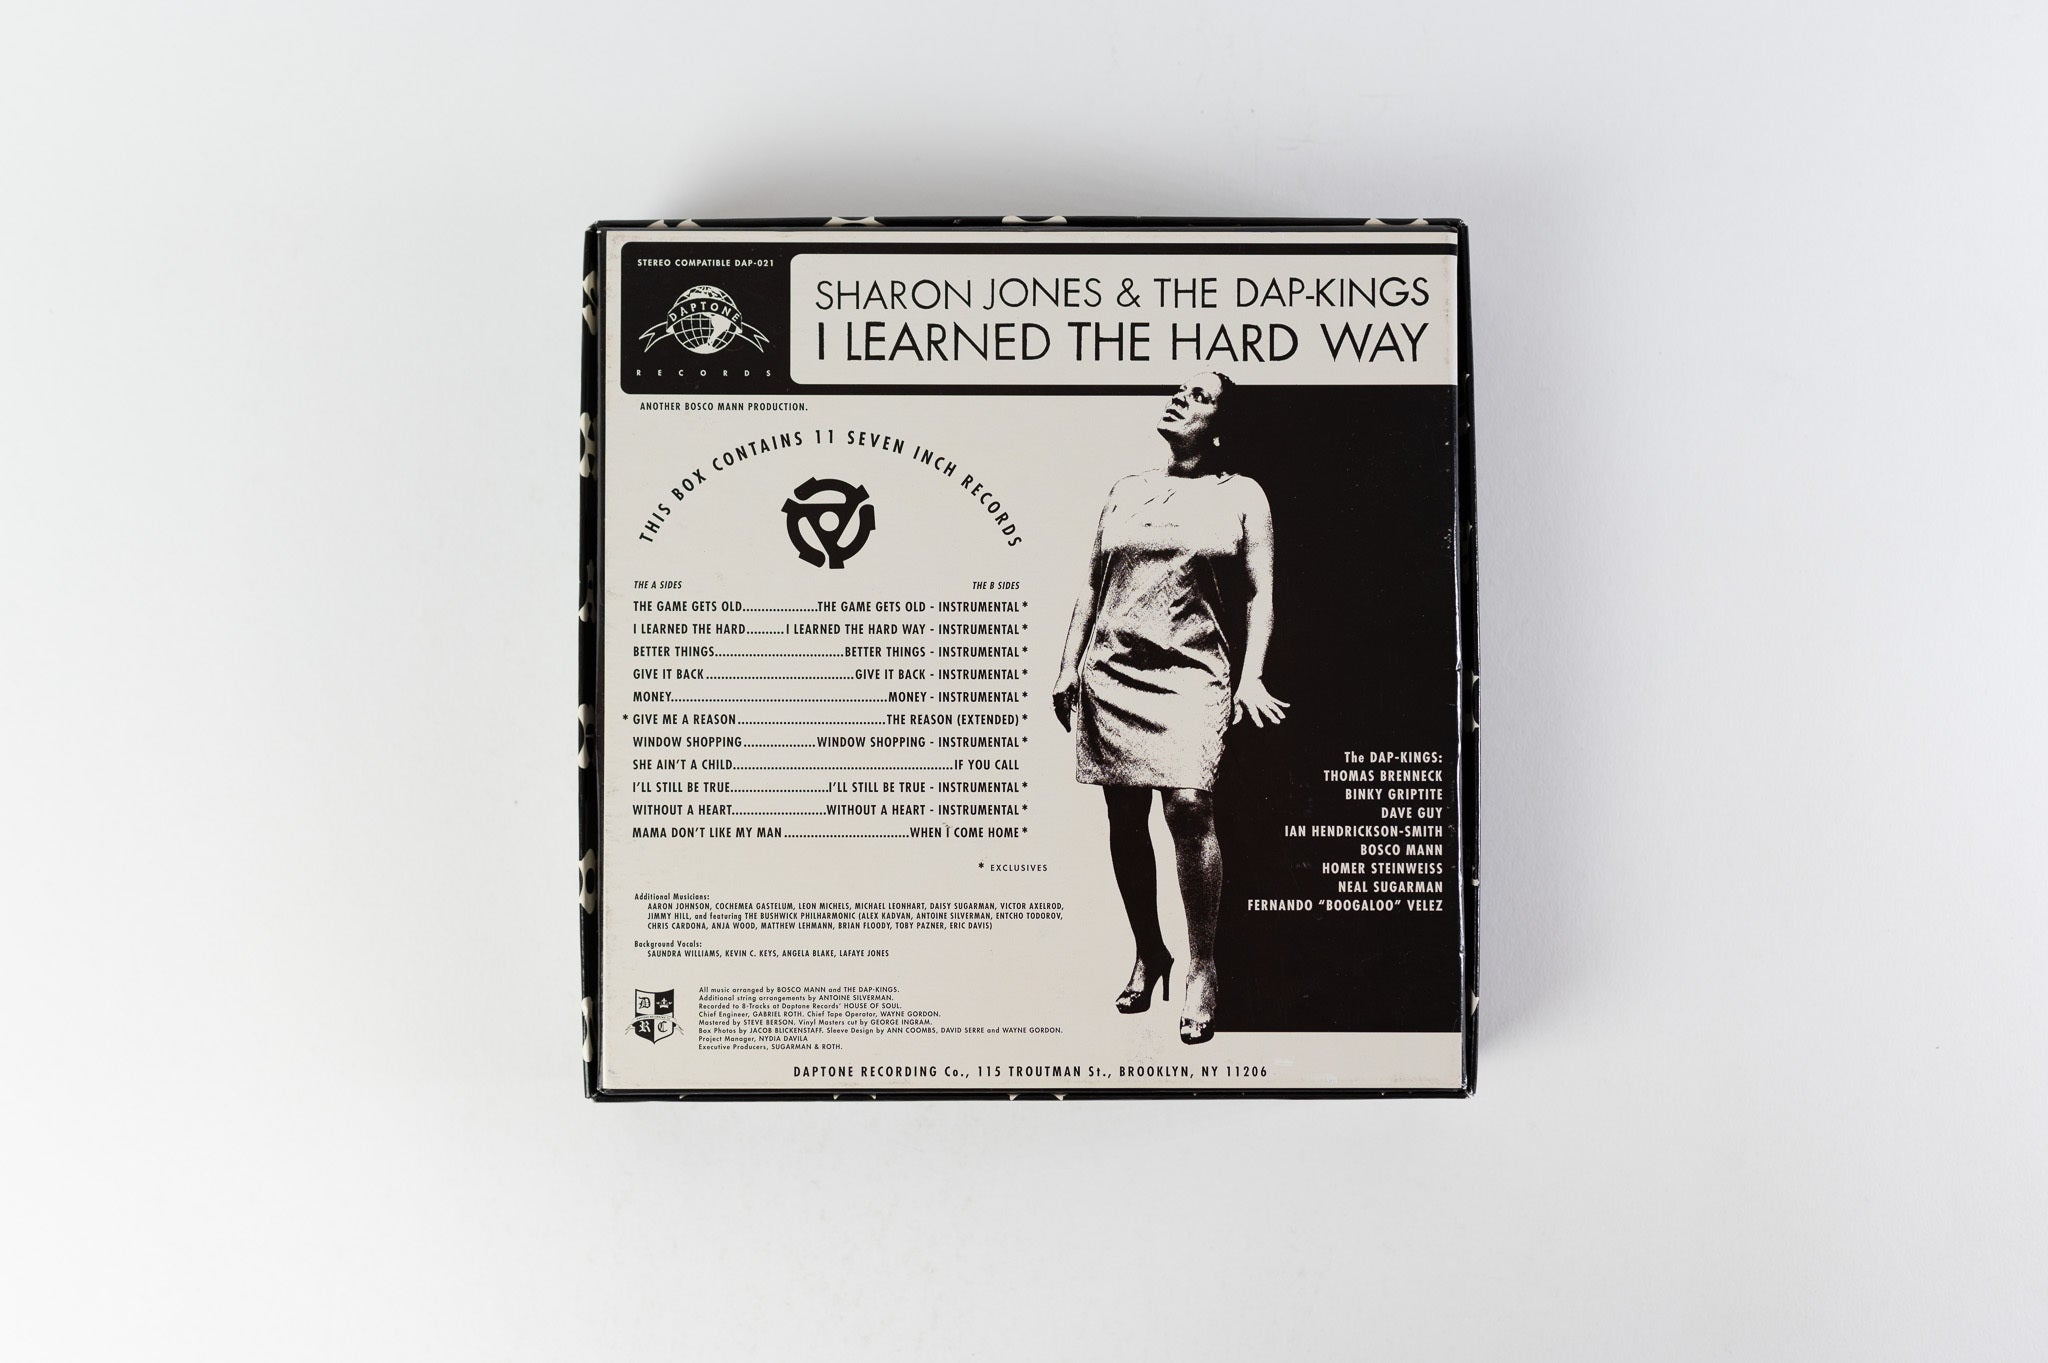 Sharon Jones & The Dap-Kings - I Learned The Hard Way on Daptone Ltd RSD Black Friday 2010 45 RPM Box Set